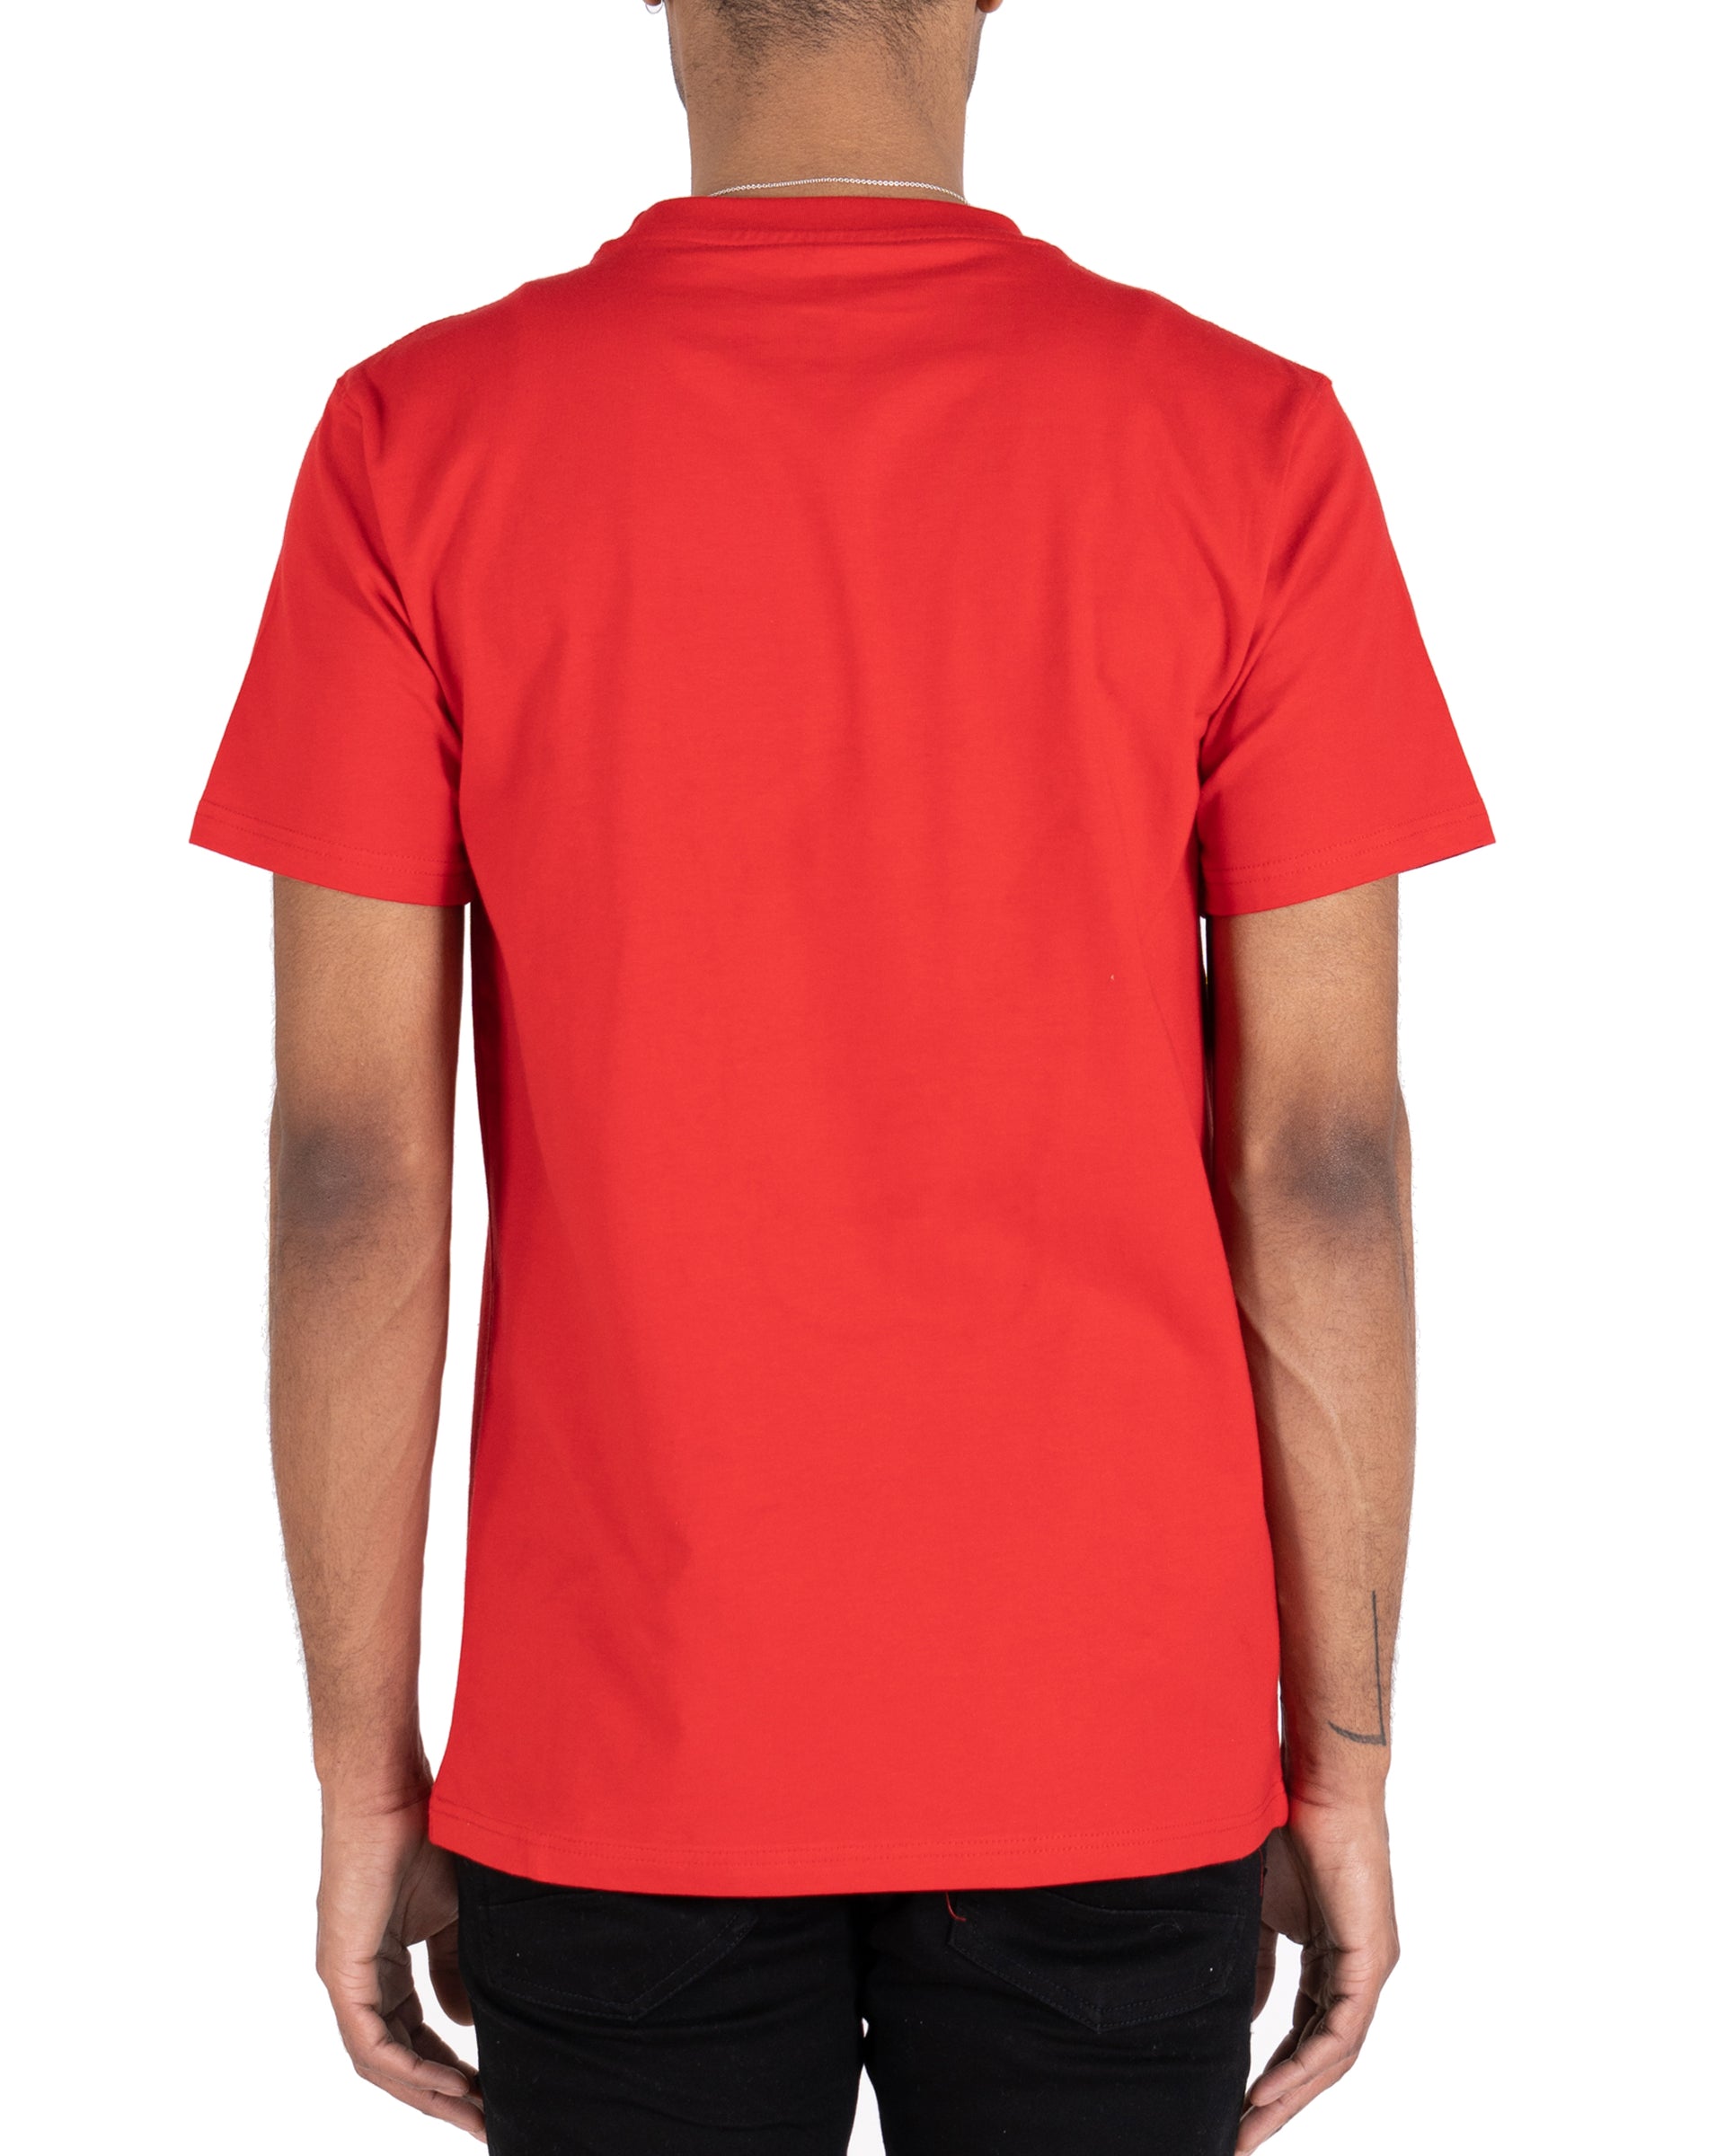 Men's "Money on Lock" Graphic T-Shirt | Red